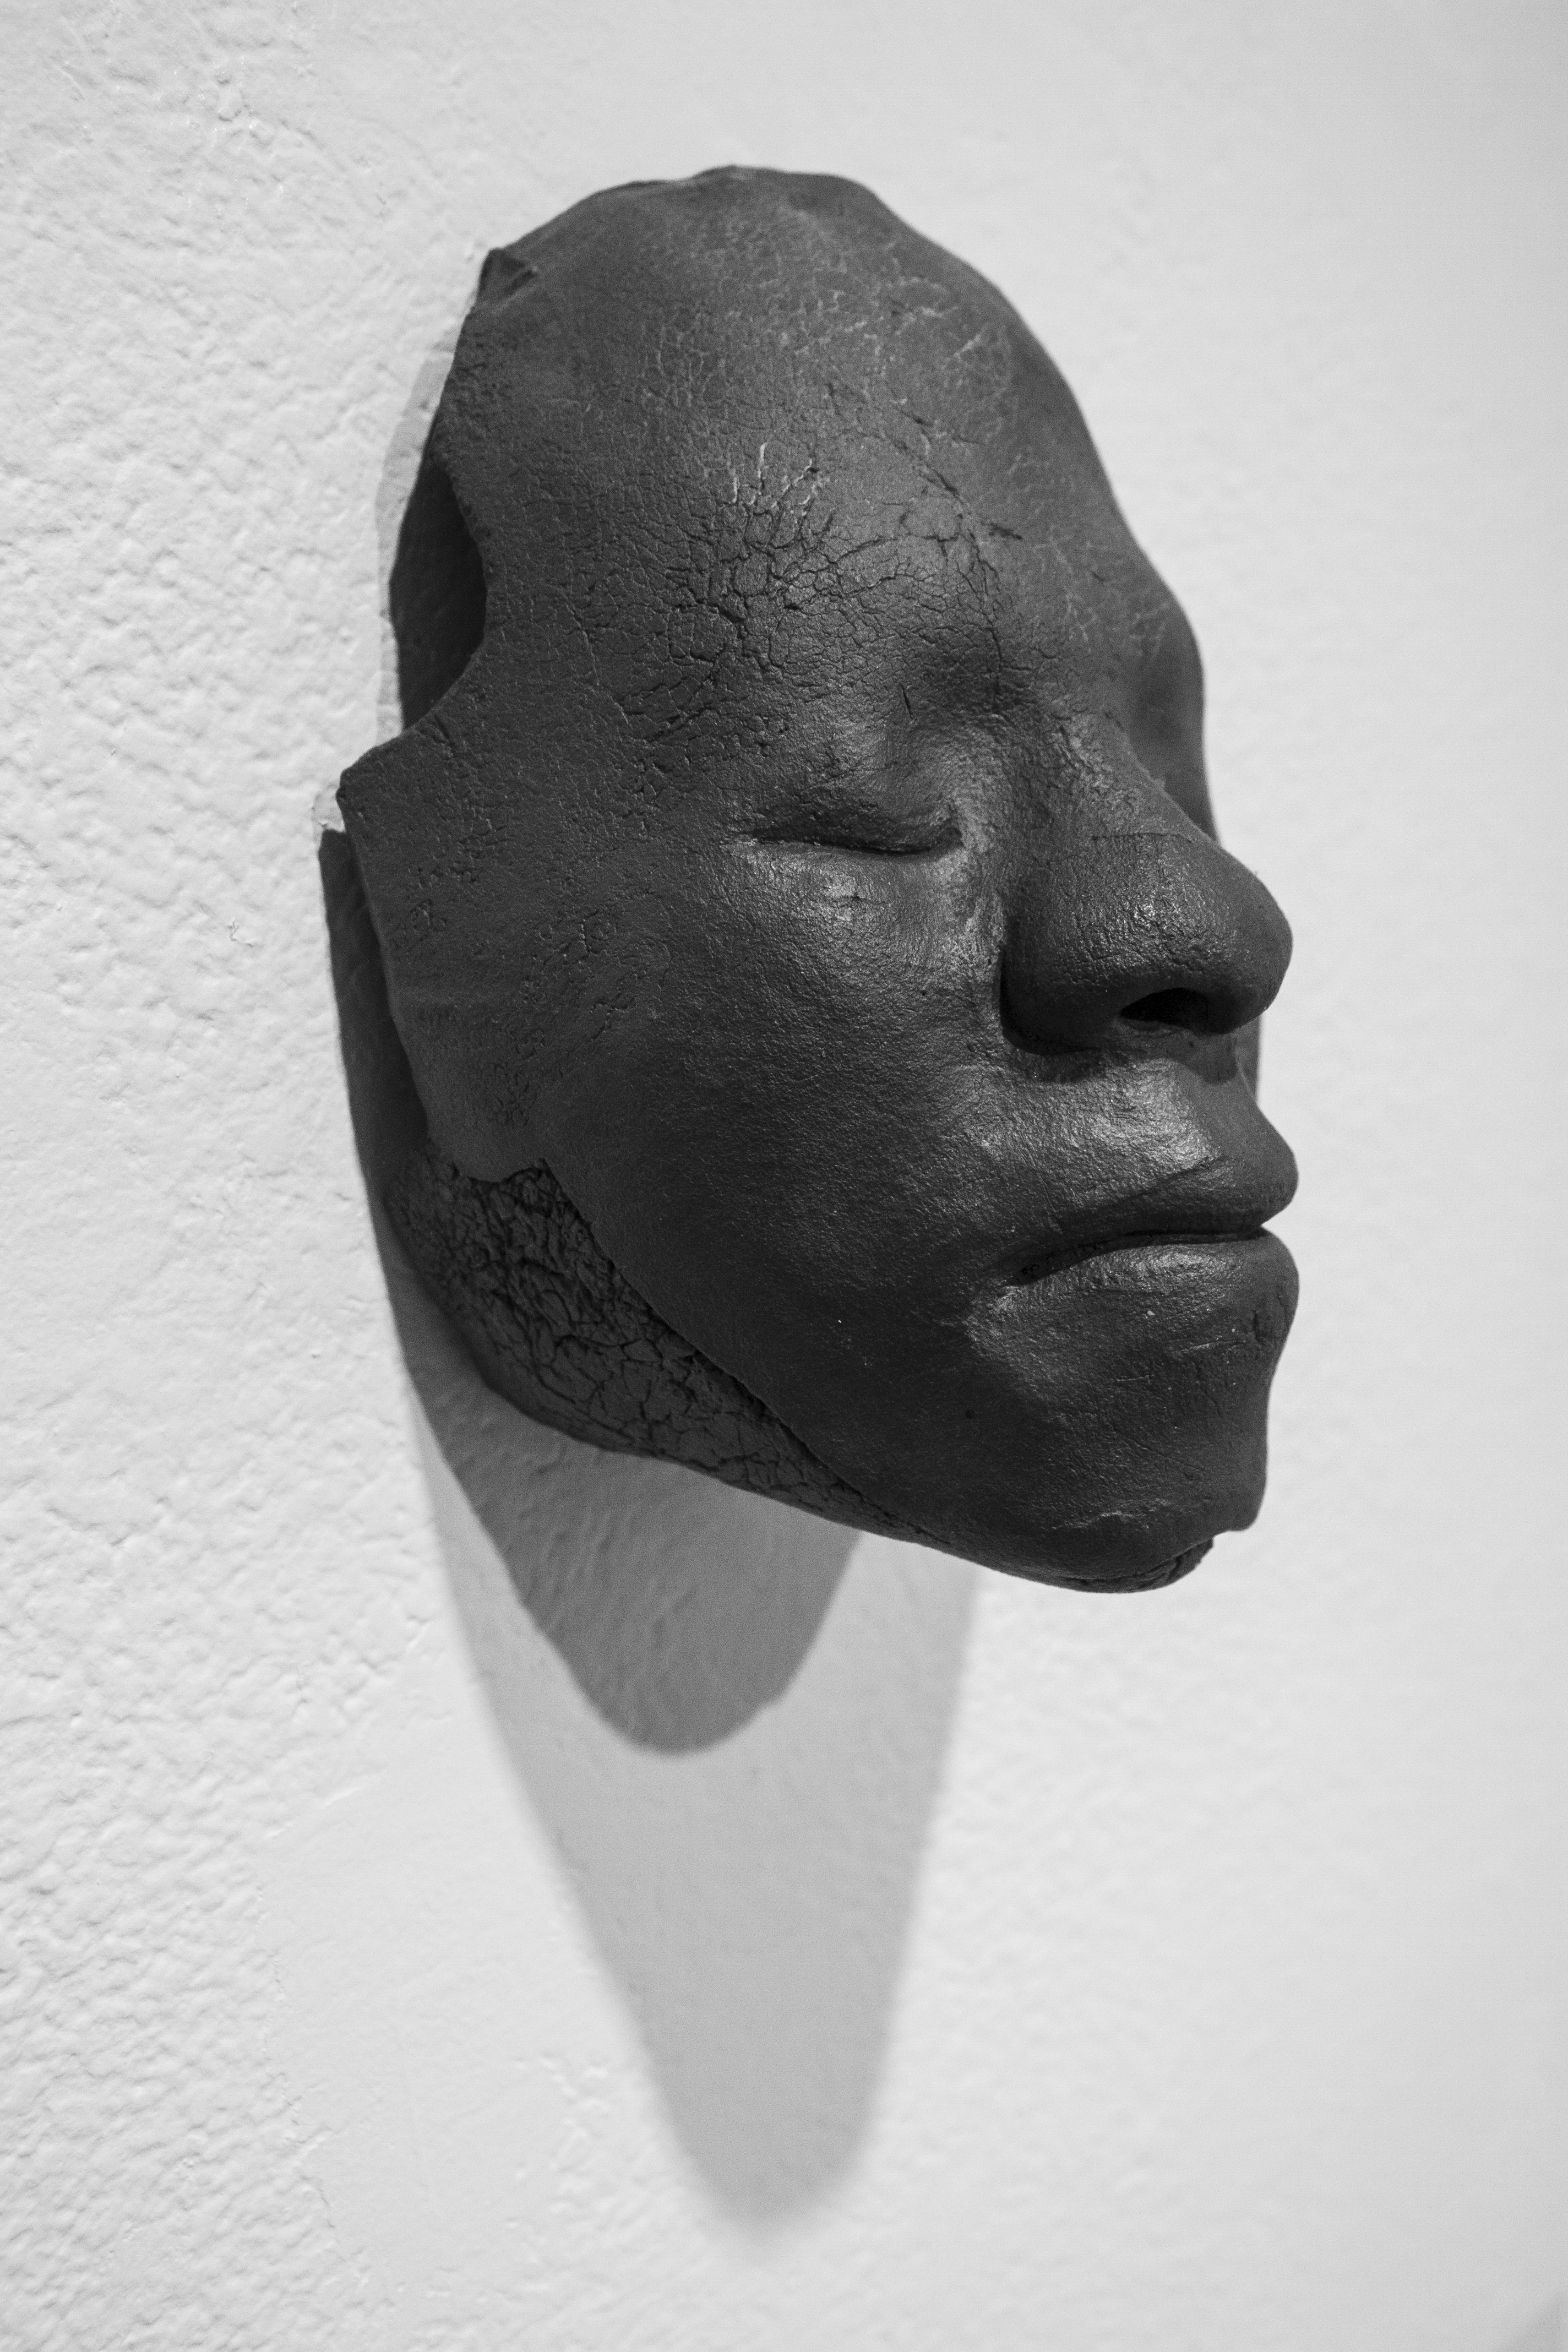 Vibrant Black identities in art